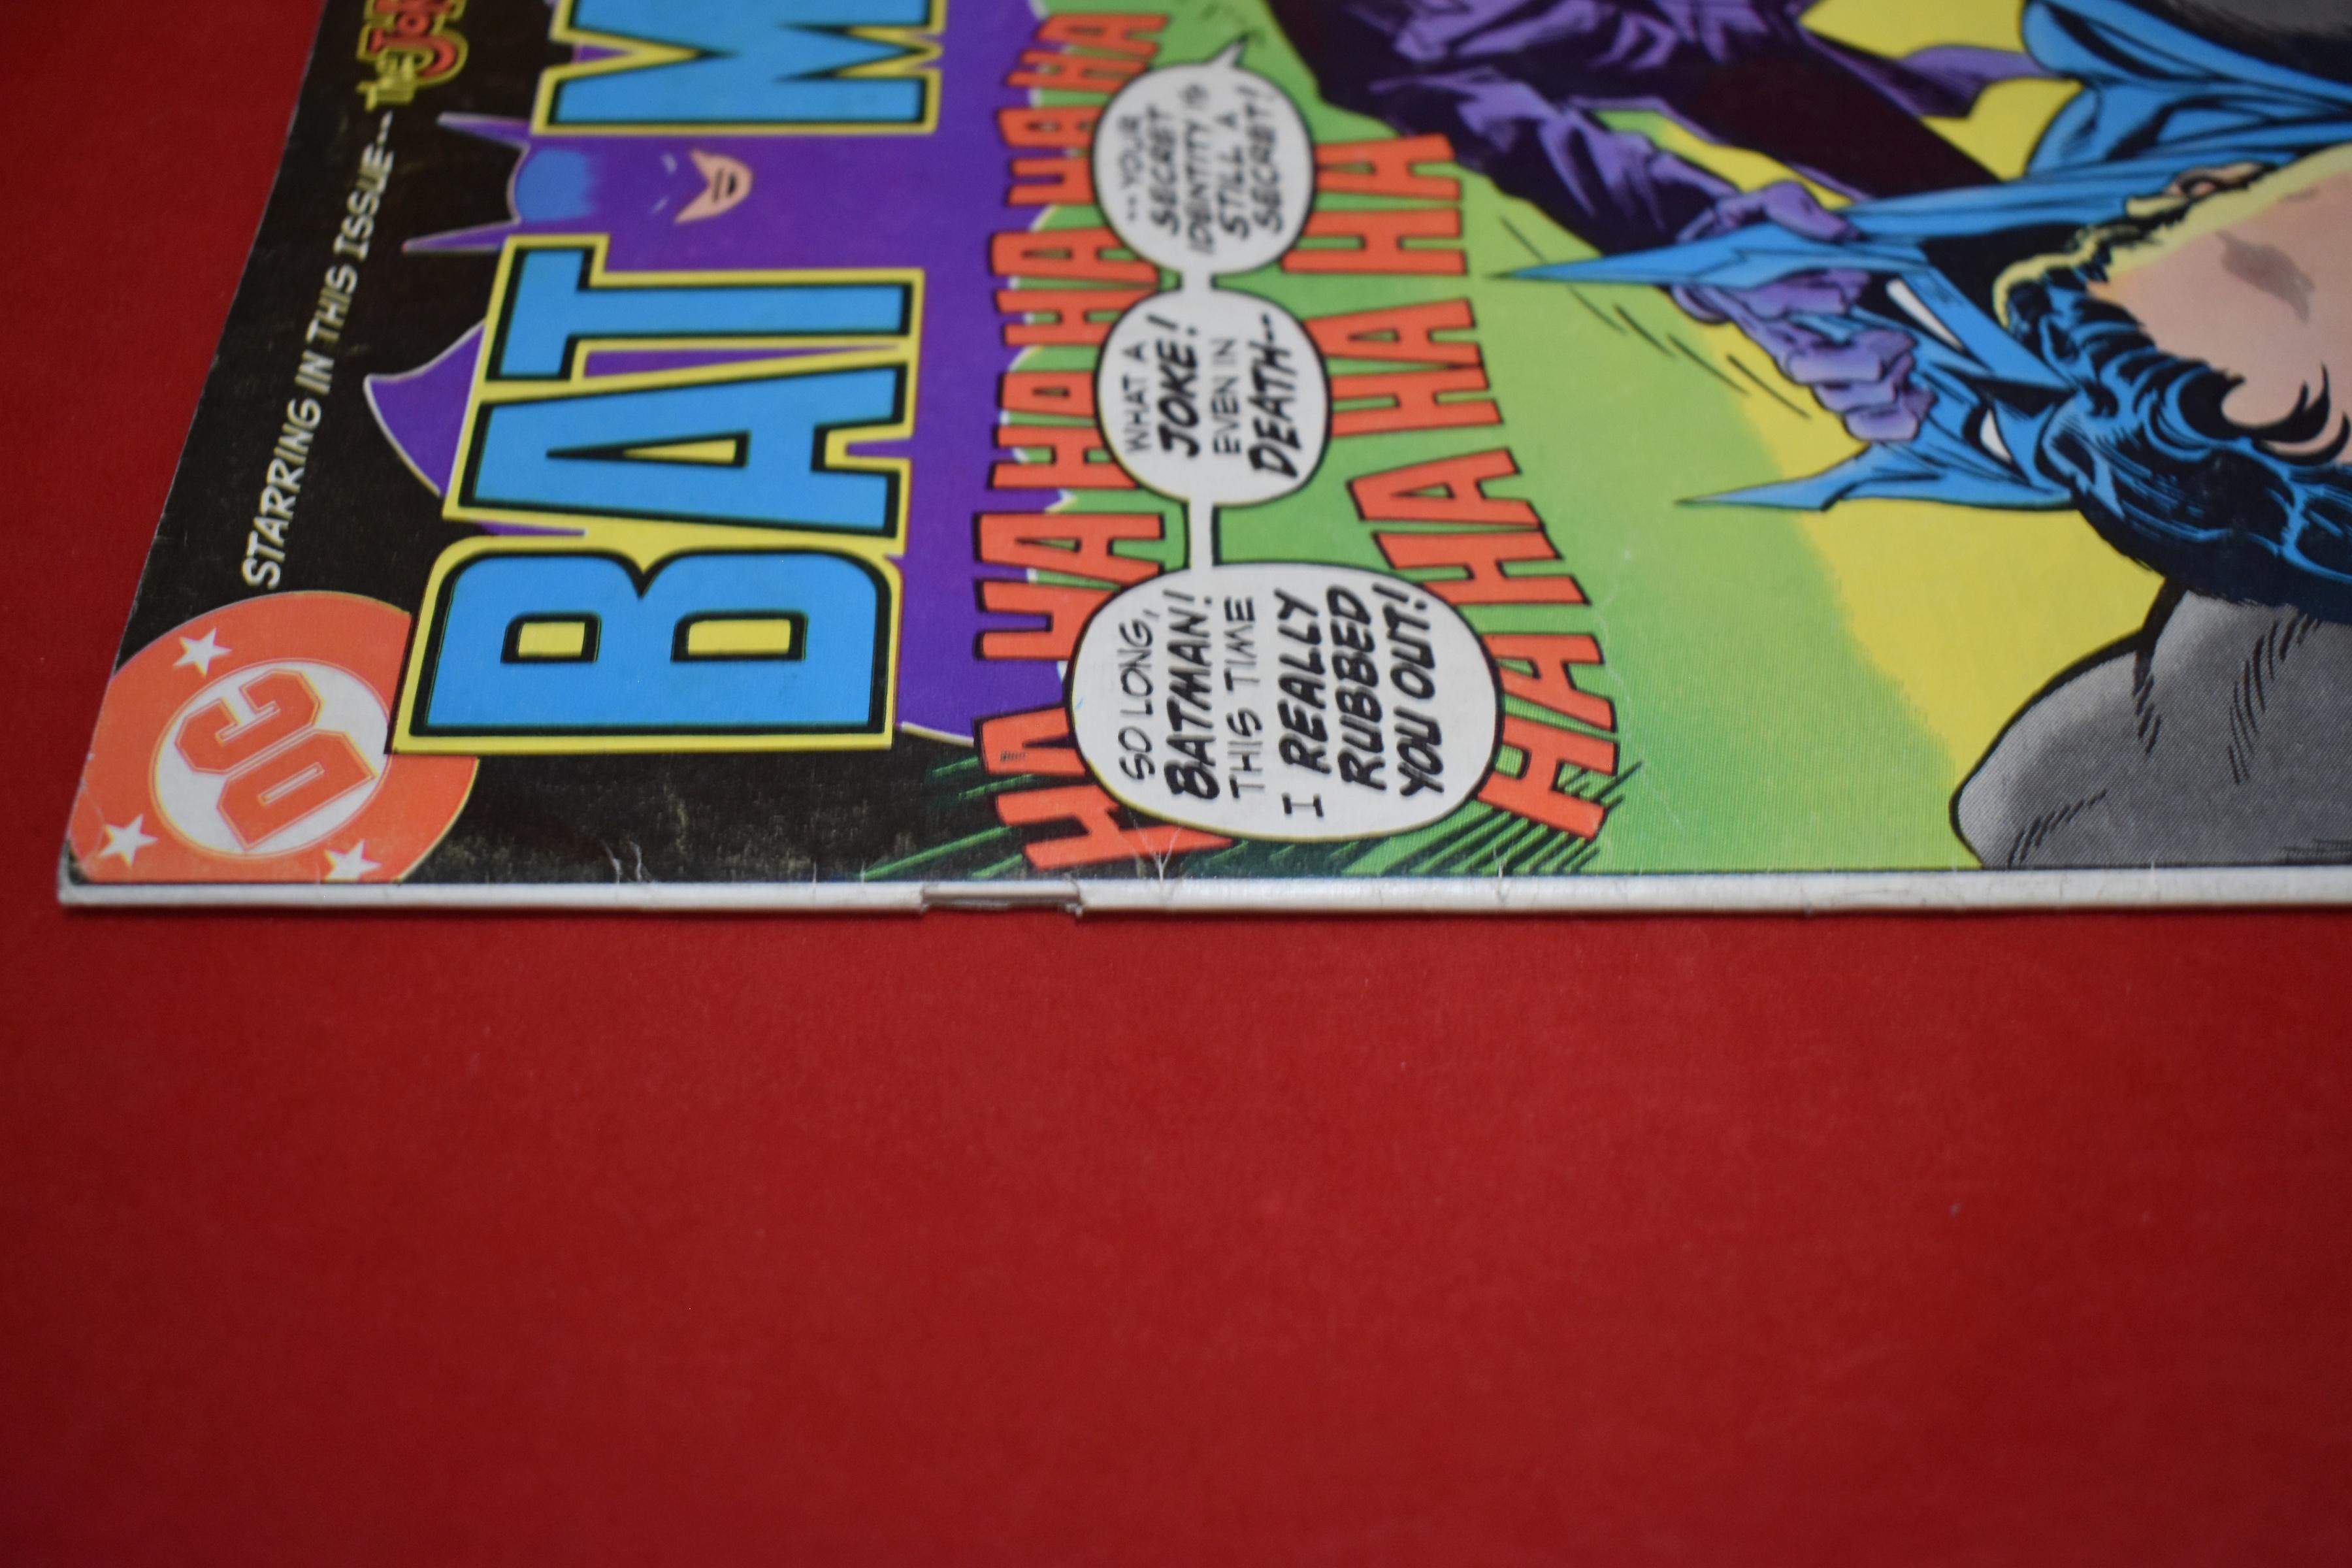 BATMAN #294 | JIM APARO COVER ART FEATURING THE JOKER